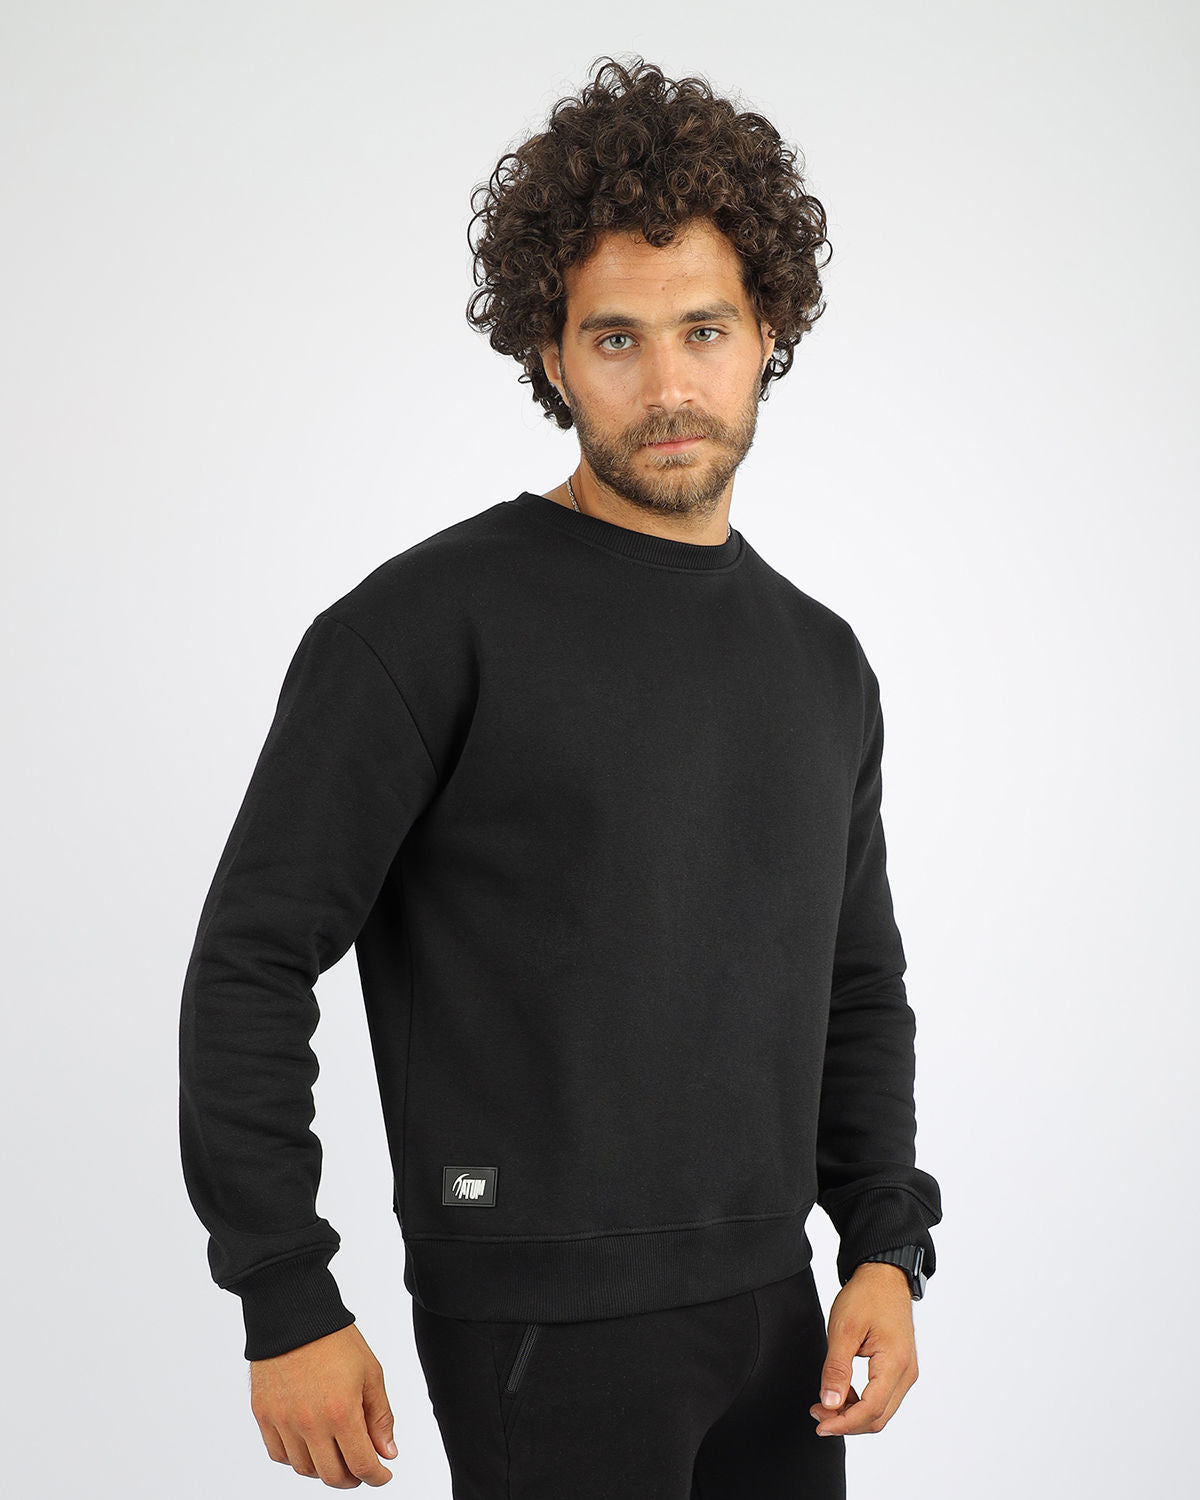 Atum Men's Sweatshirt